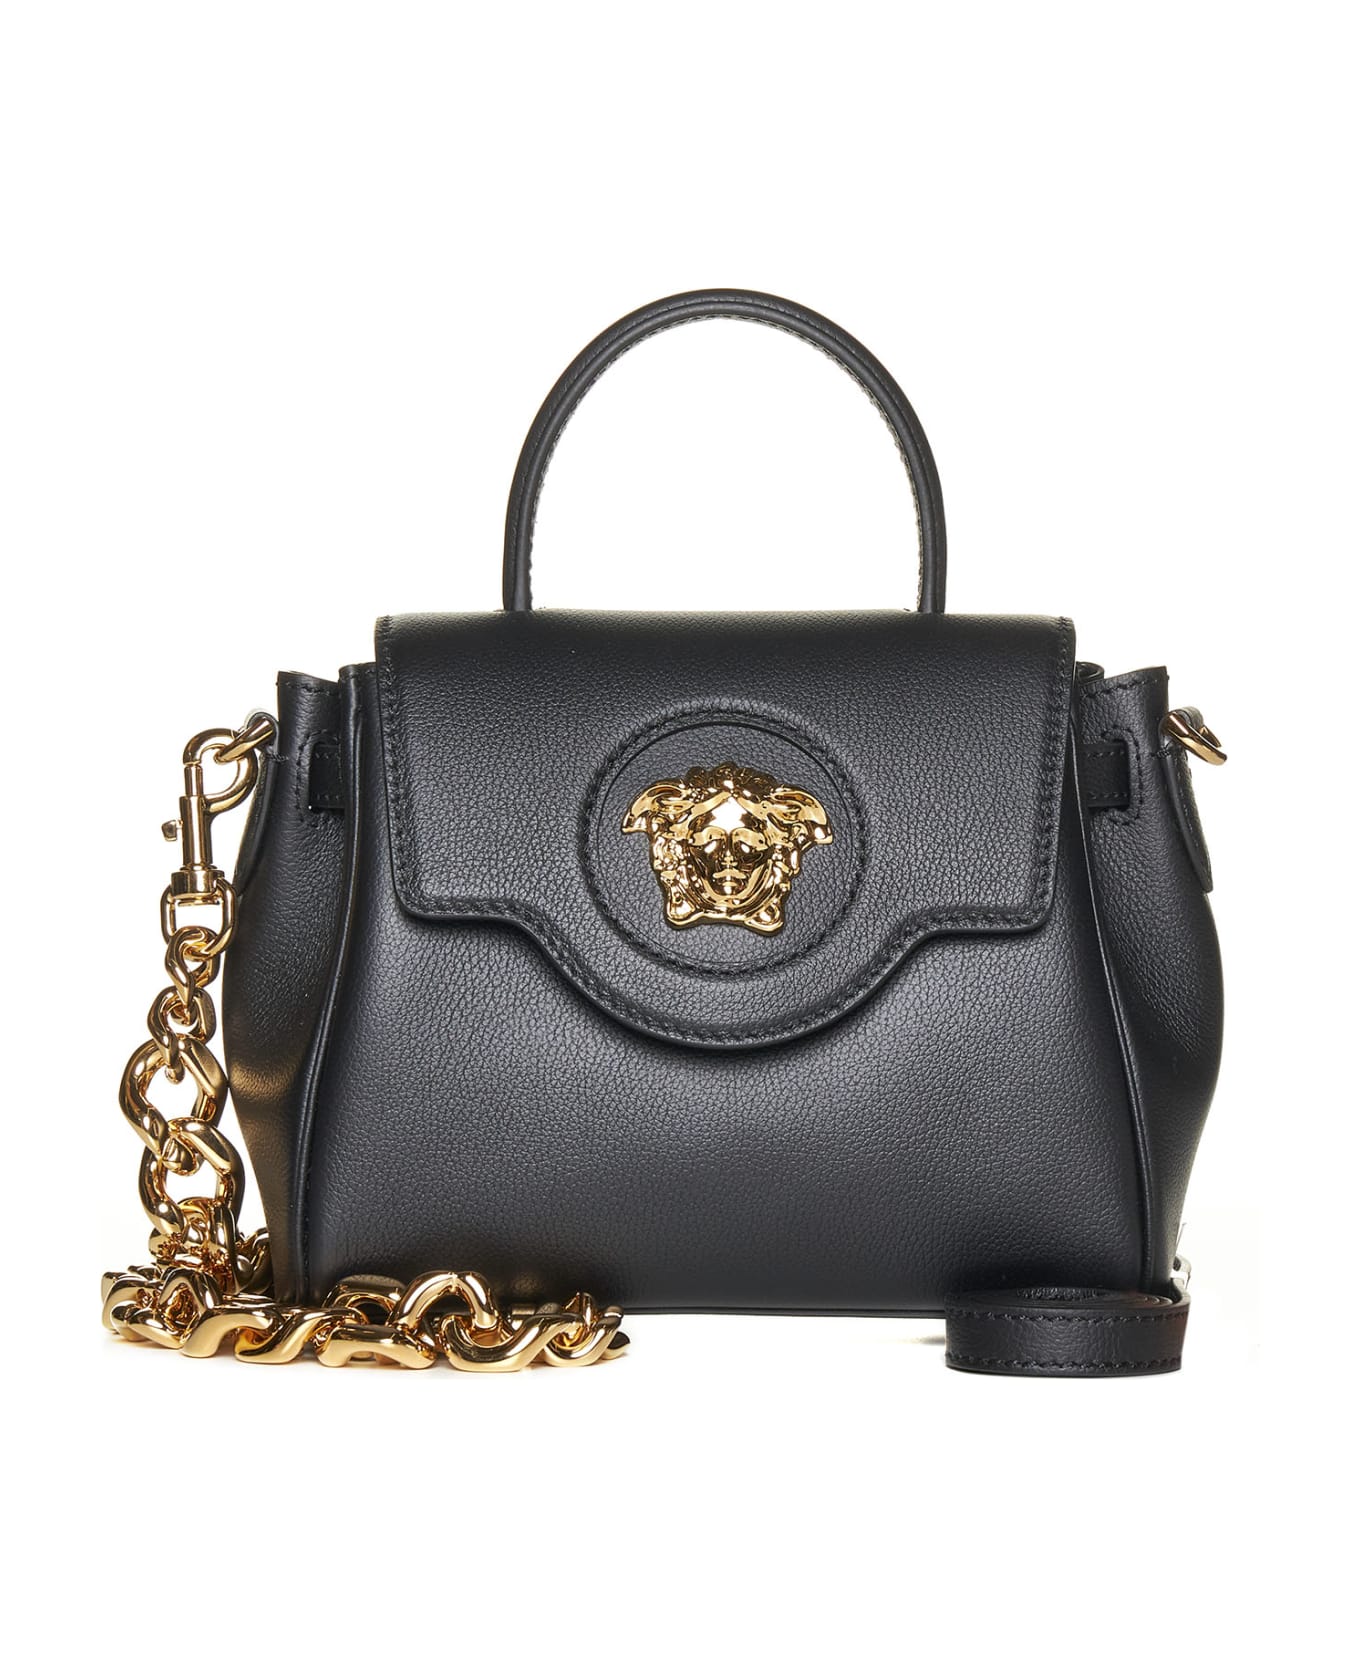 Versace La Medusa Small Leather Bag - Nero/oro Versace